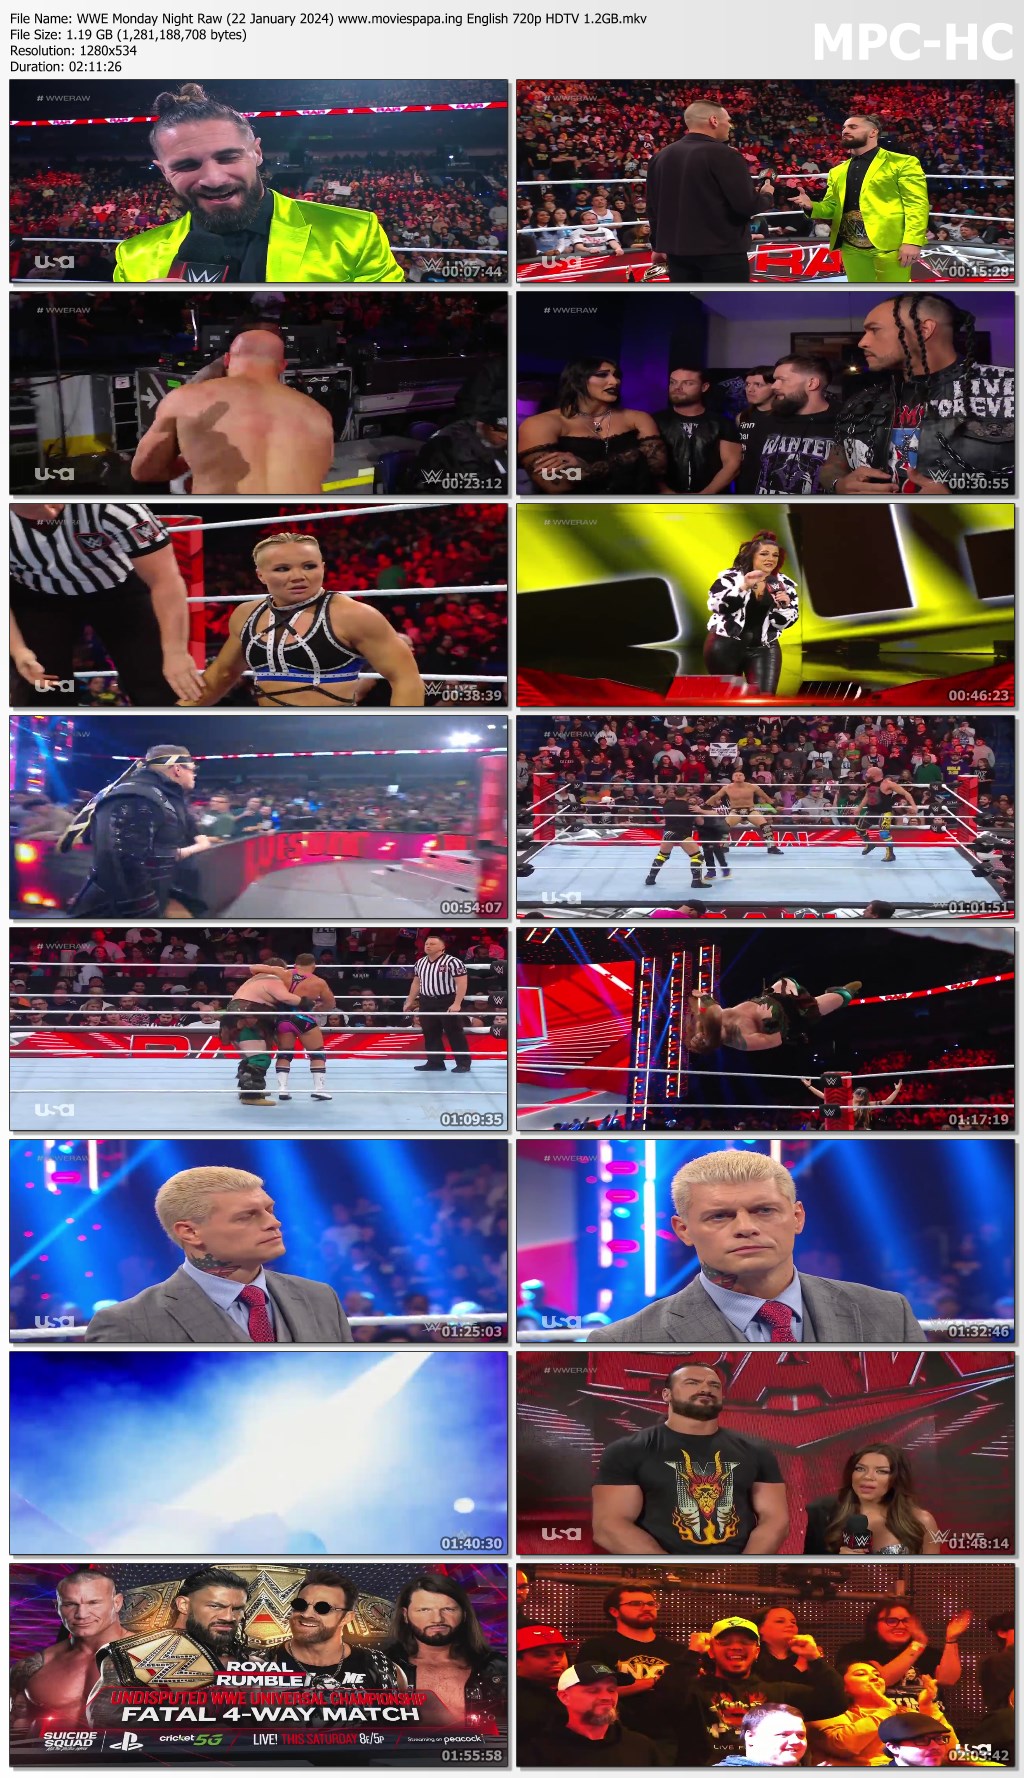 WWE Monday Night Raw 22 January 2024 www.moviespapa.ing English 720p HDTV 1.2GB.mkv thumbs